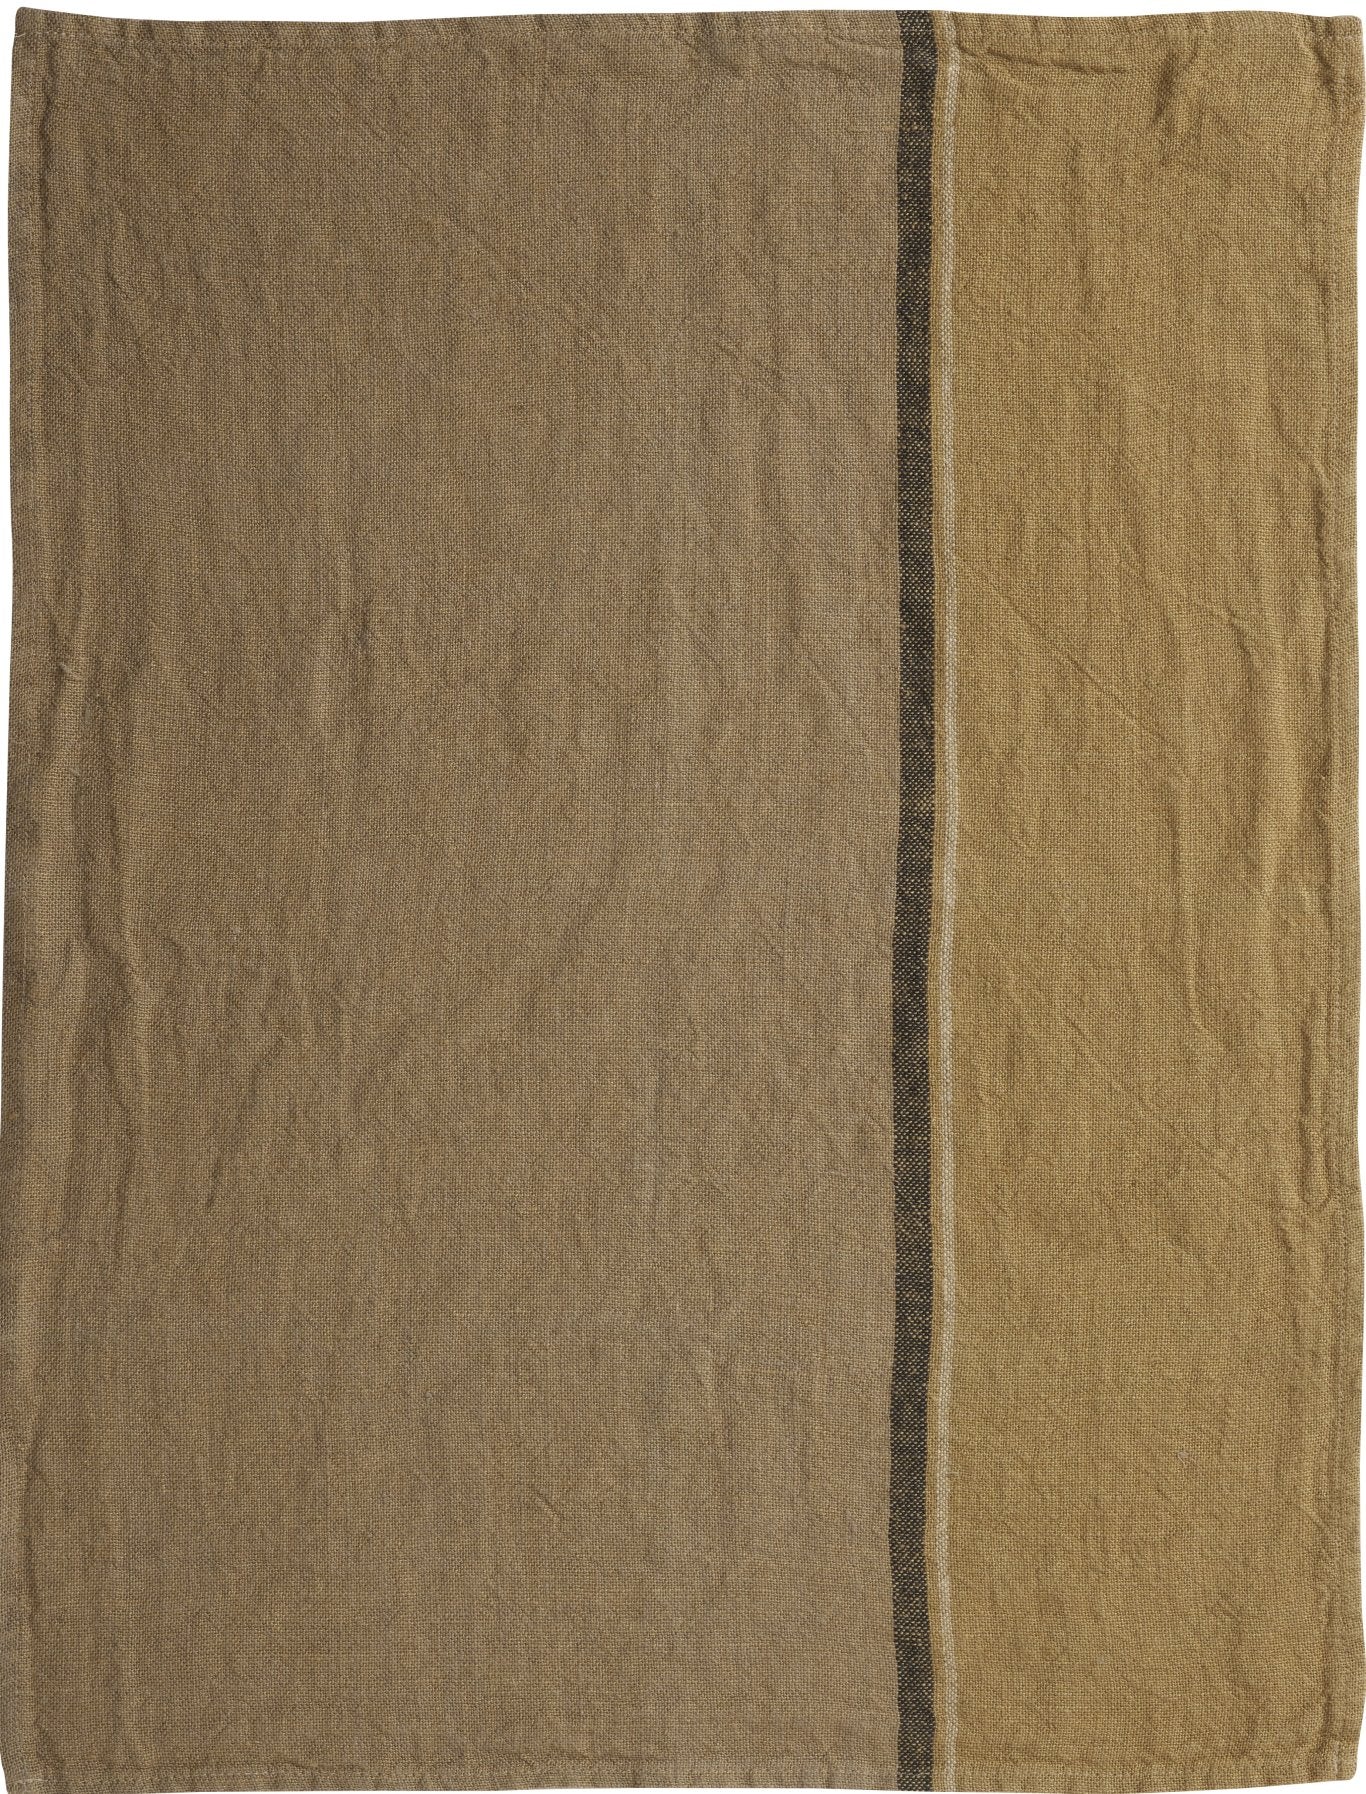 Charvet Editions "Dublin - Bronze", Rustic woven linen tea towel. Made in France.